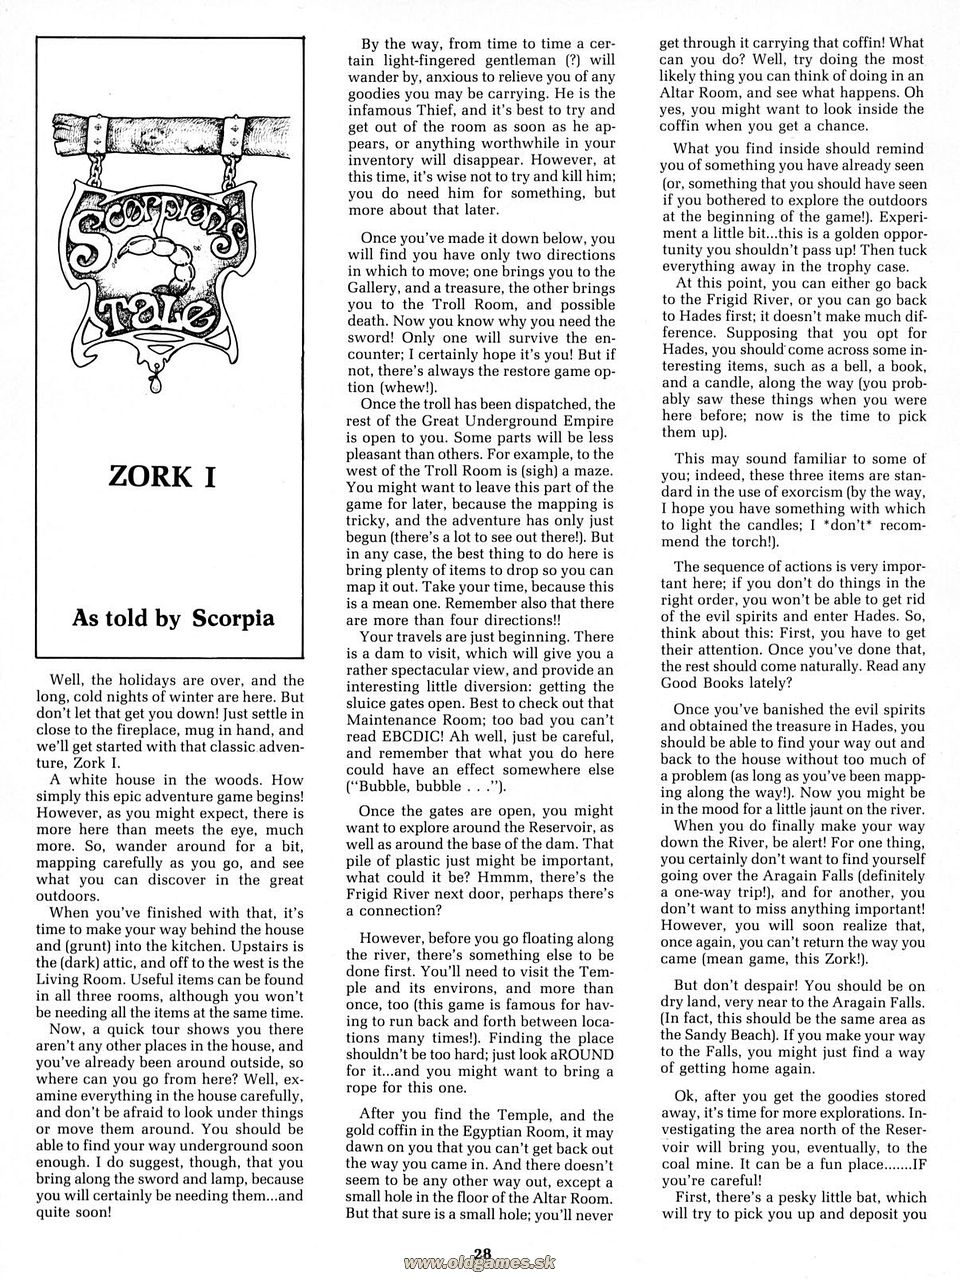 Scorpion's Tale: Zork I